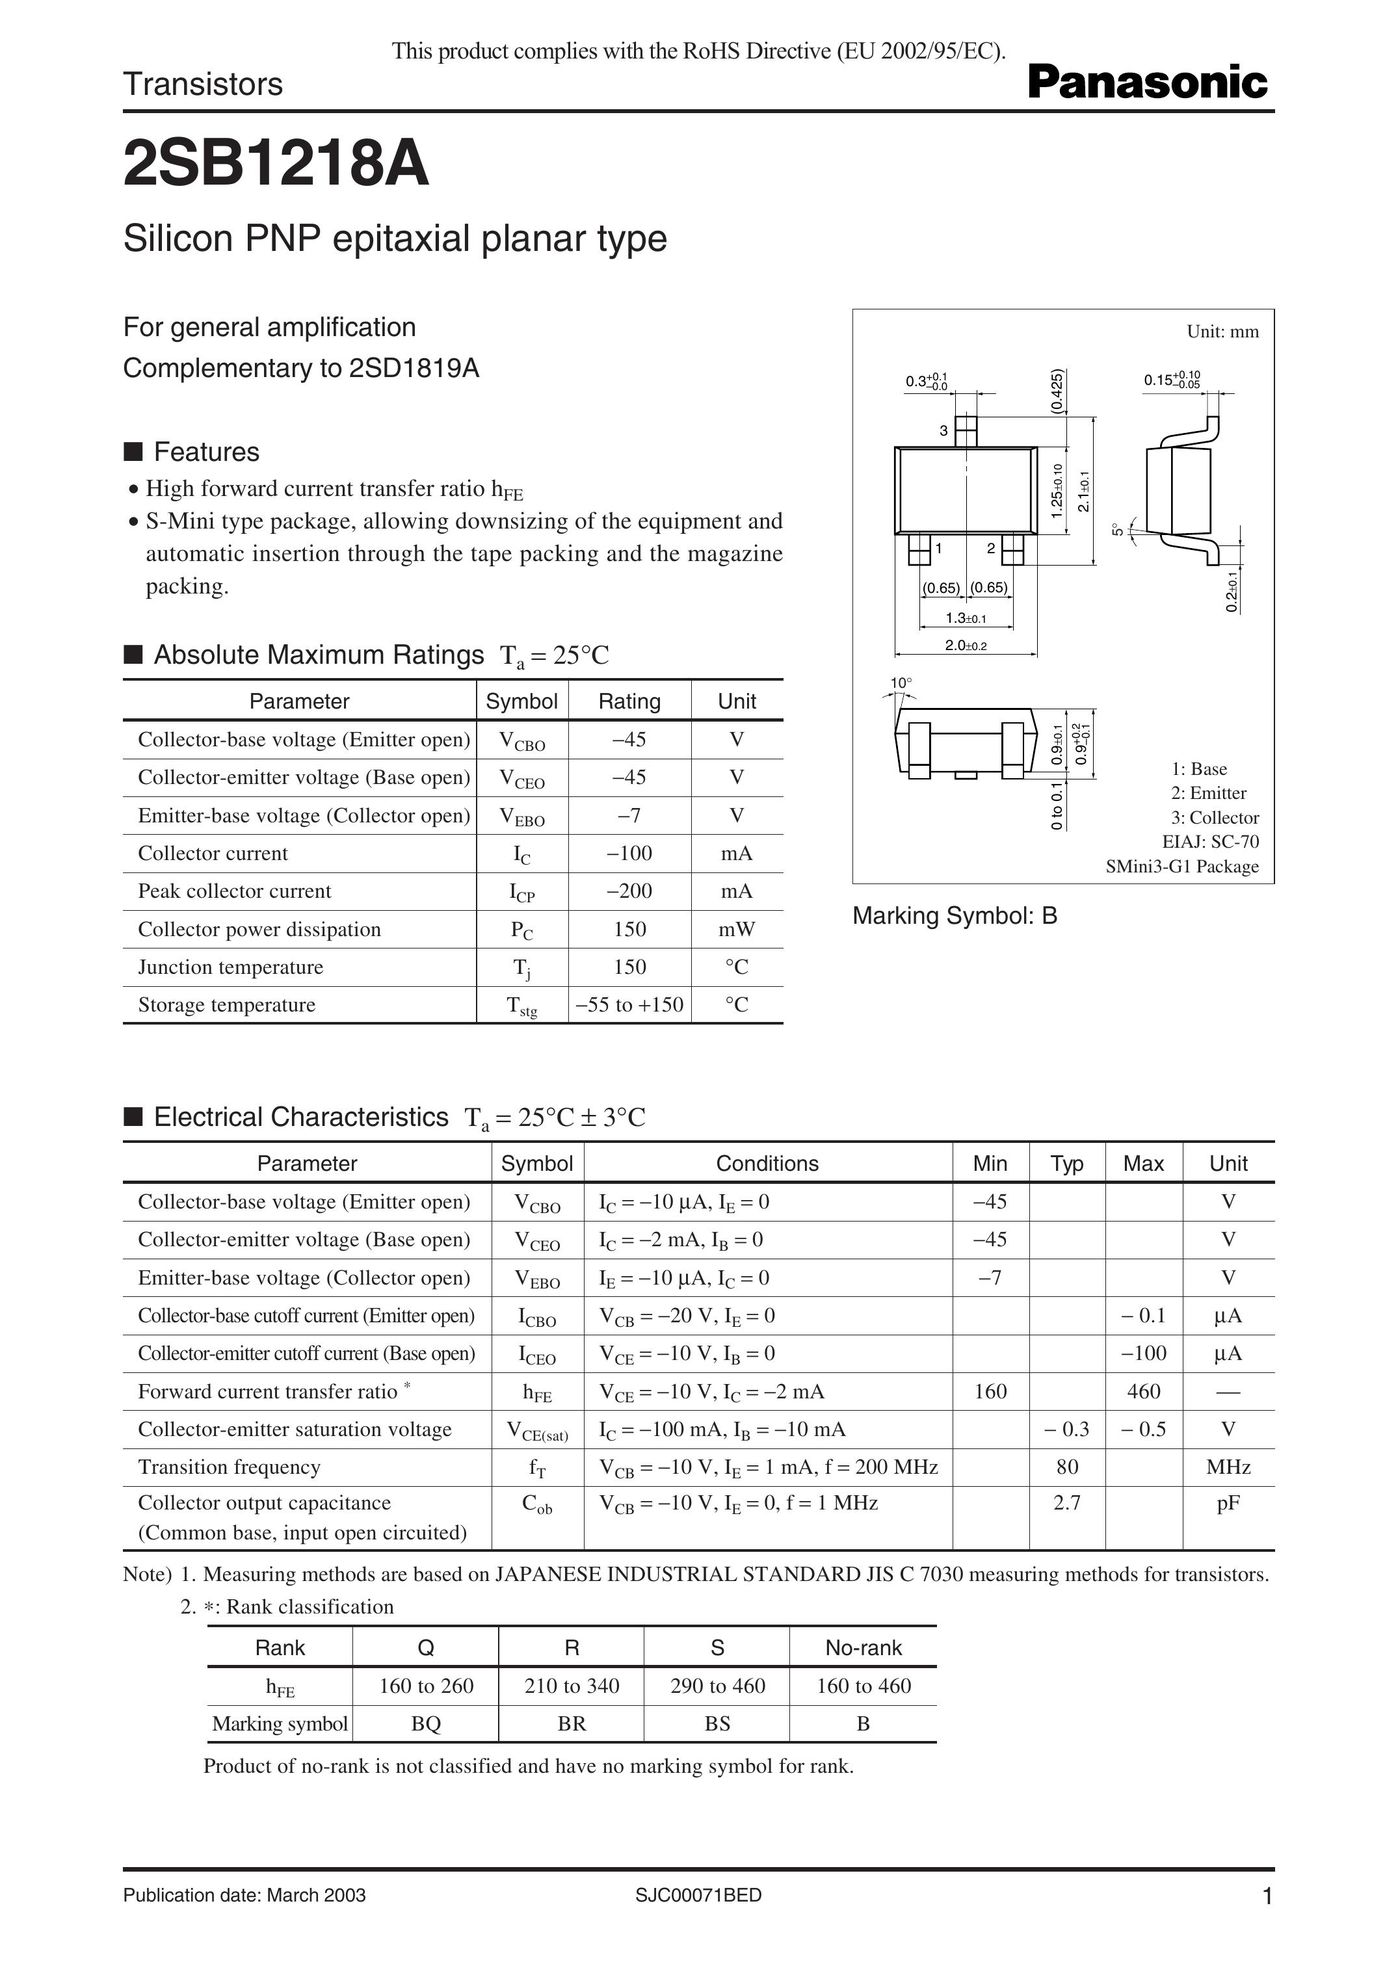 Panasonic 2SB1218A Switch User Manual